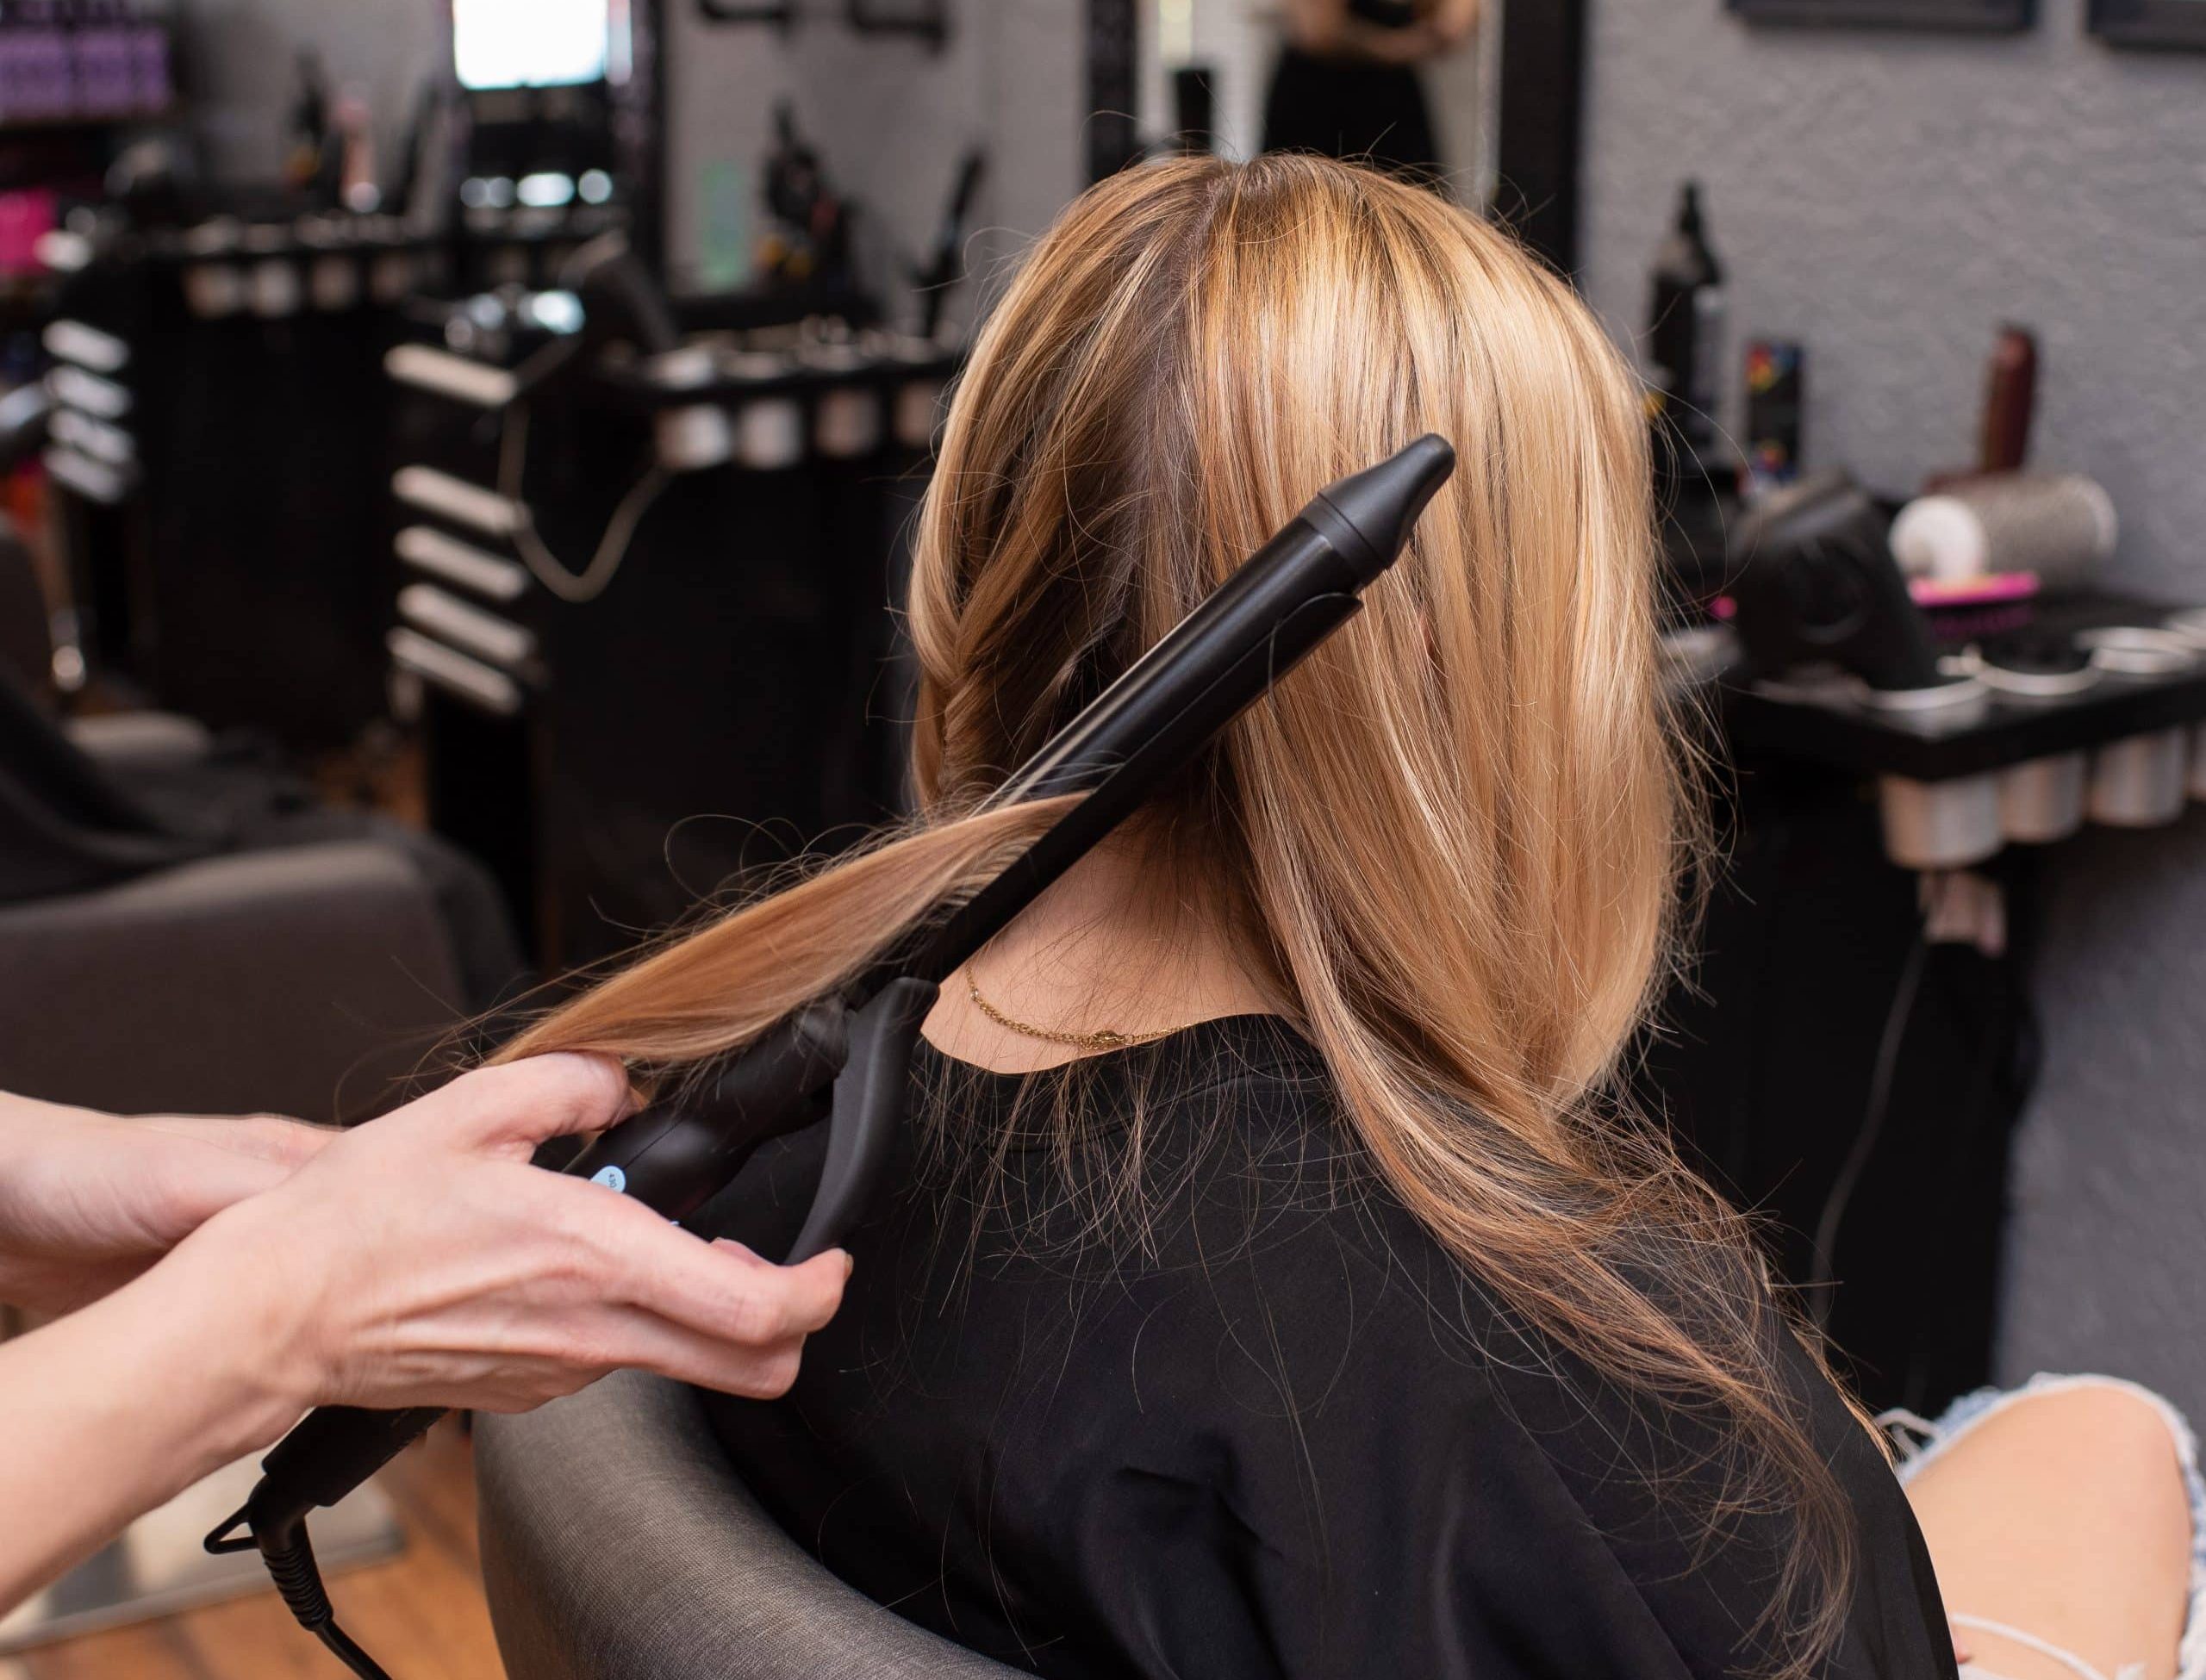 Hair stylist curling a client's hair